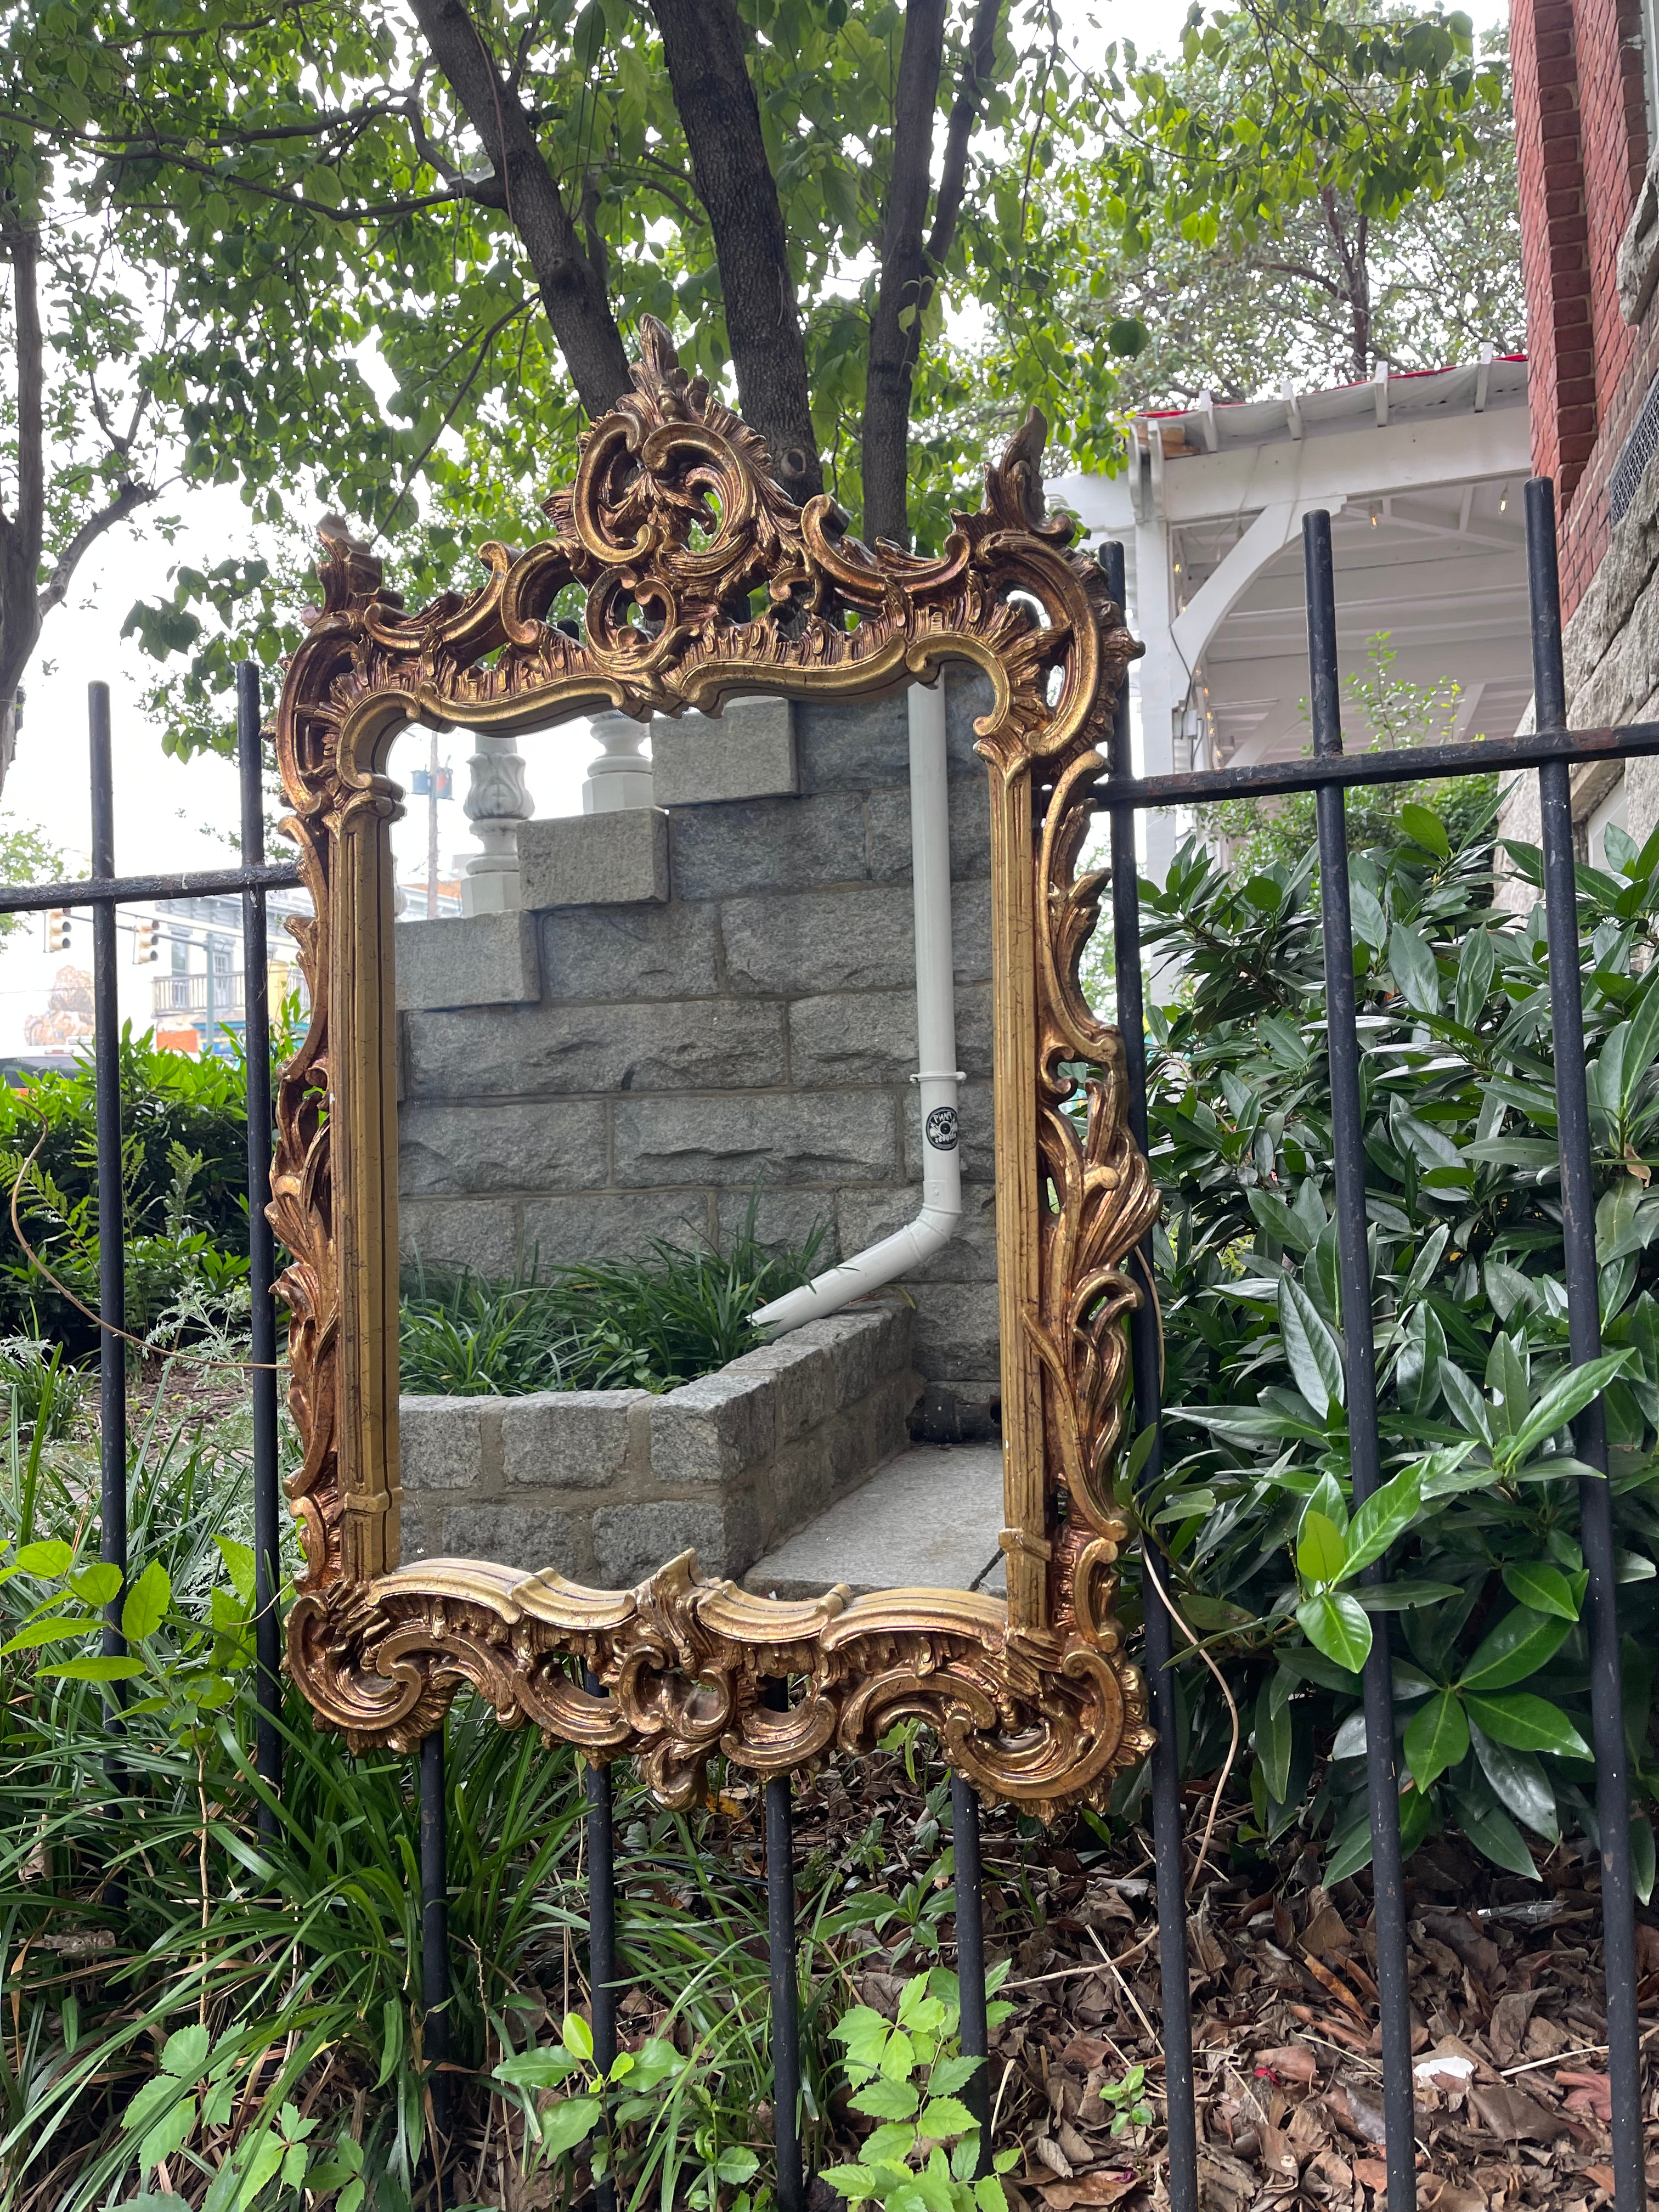 Gold Ornate Mirror